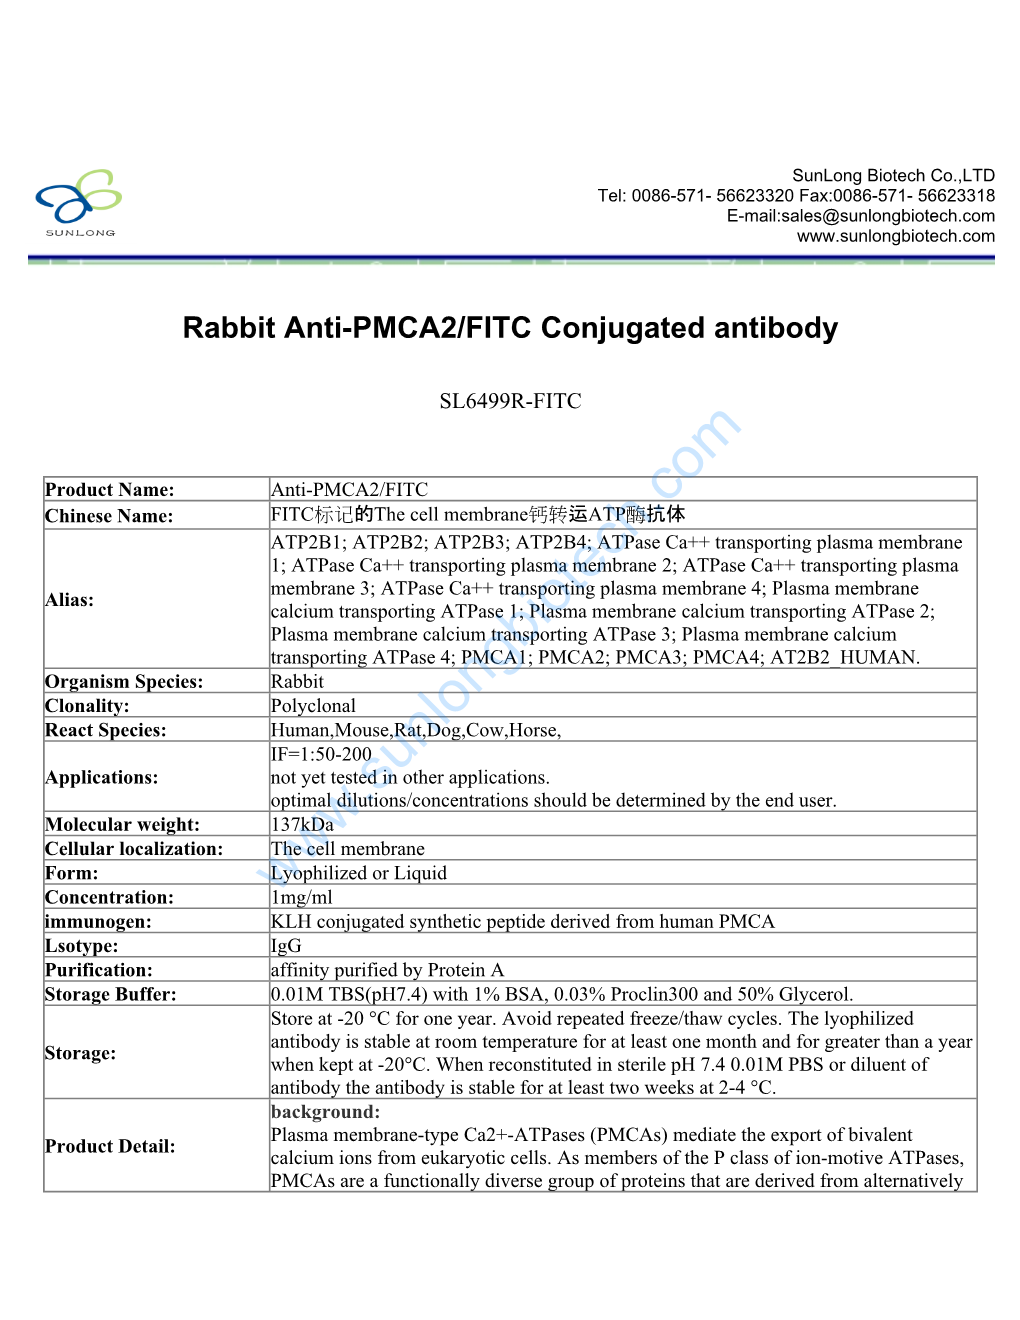 Rabbit Anti-PMCA2/FITC Conjugated Antibody-SL6499R-FITC